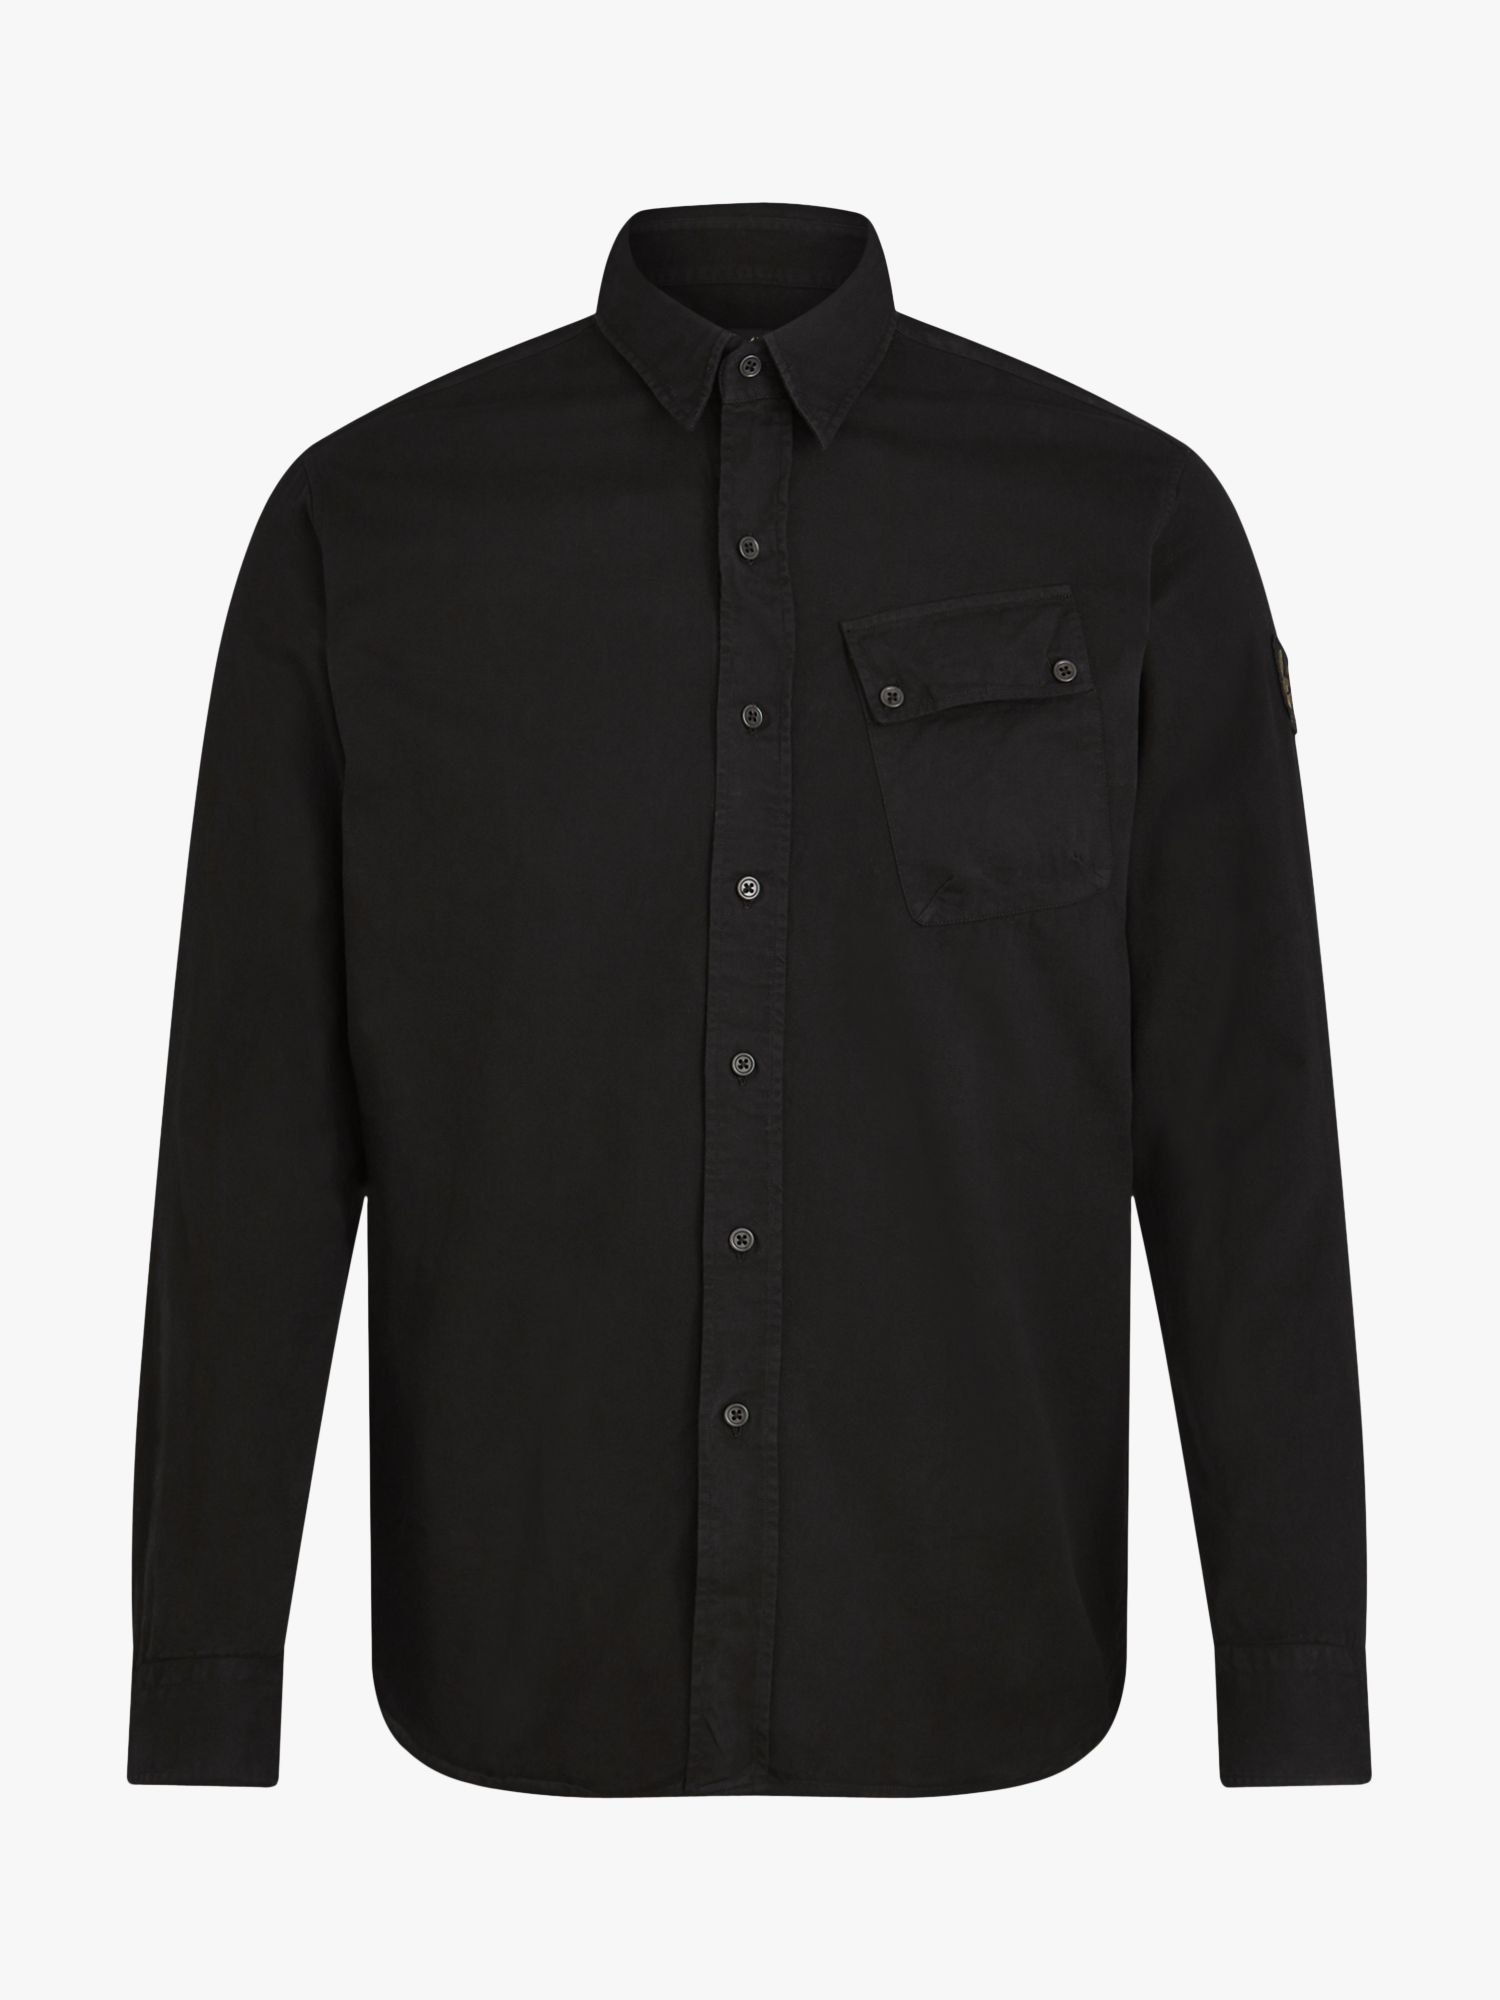 Belstaff Pitch Shirt, Black at John Lewis & Partners